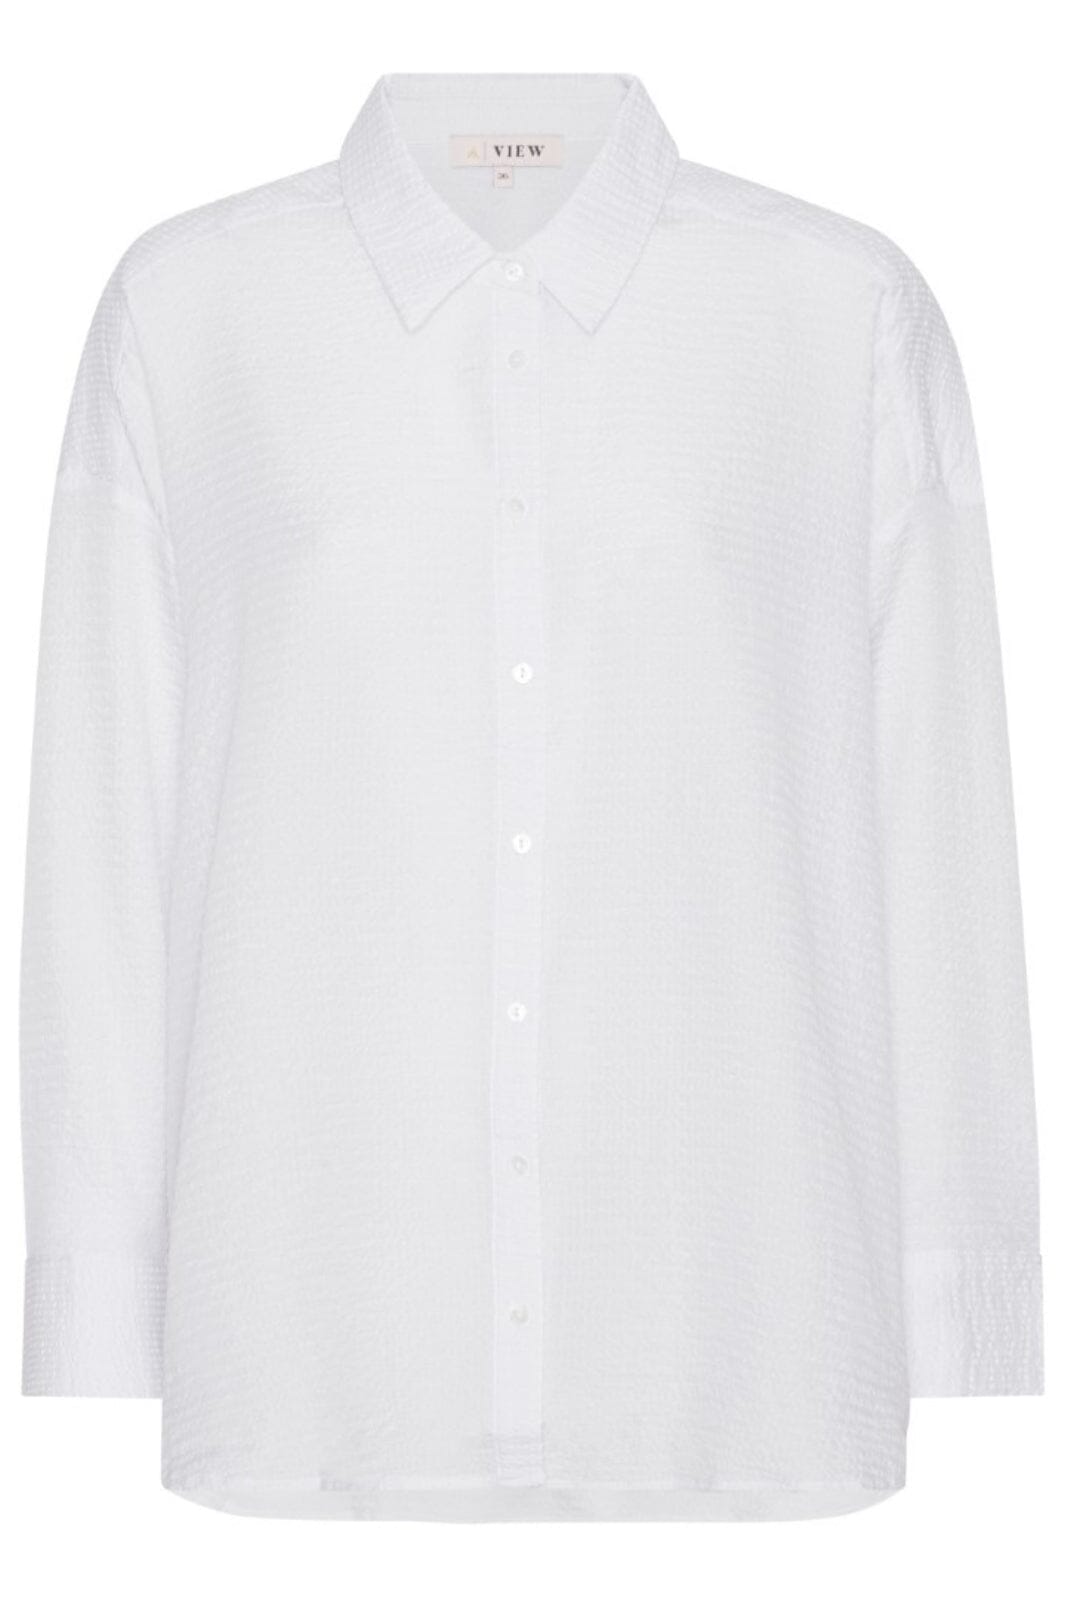 A-View - Sonja Shirt - 000 White Skjorter 